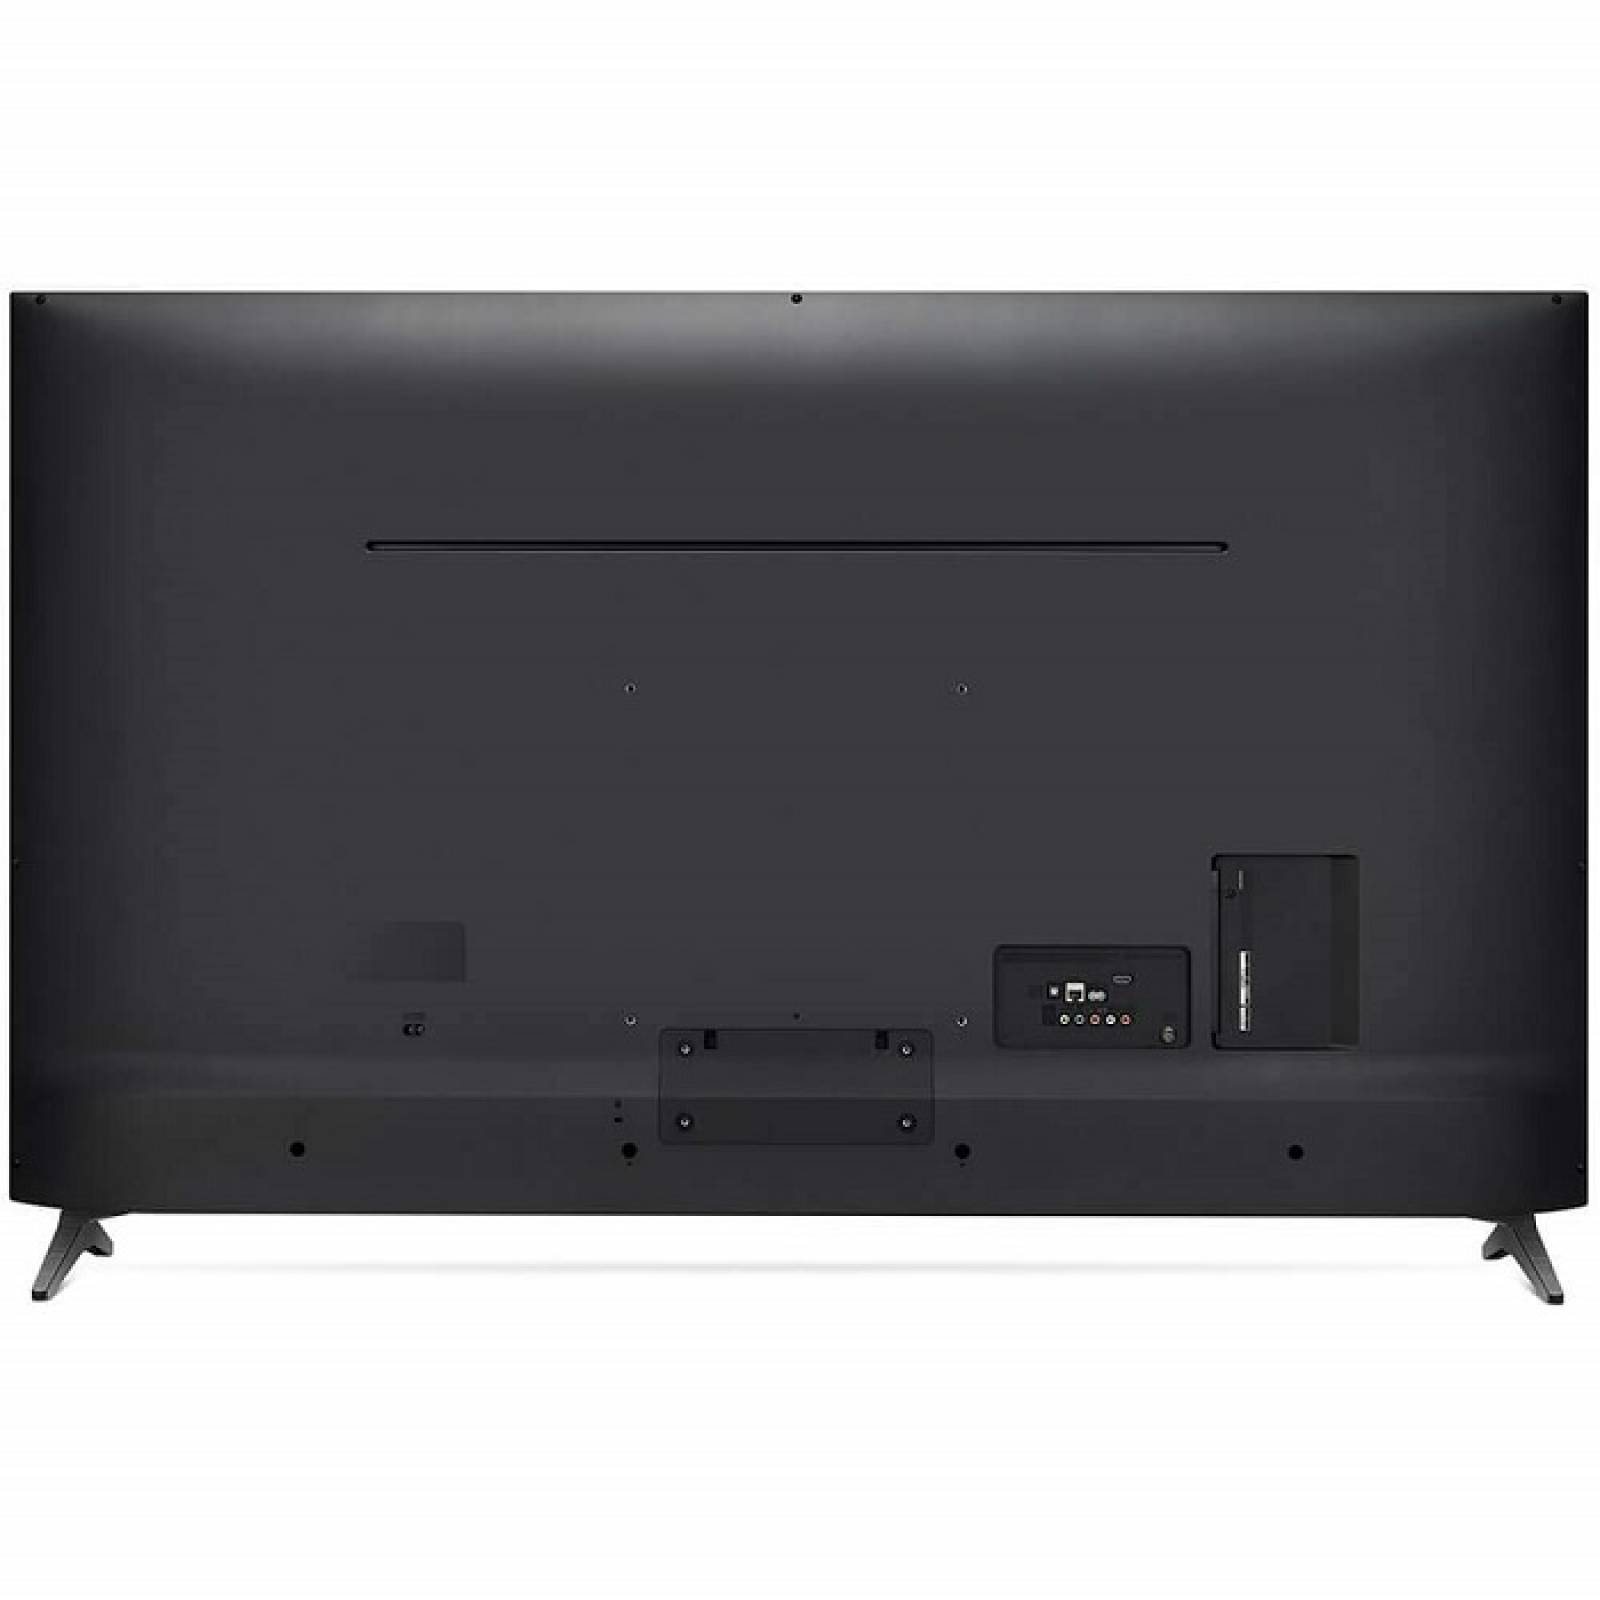 Smart TV LG 49 4K HDR UHD Panel IPS 49UK6090PUA - Reacondicionado